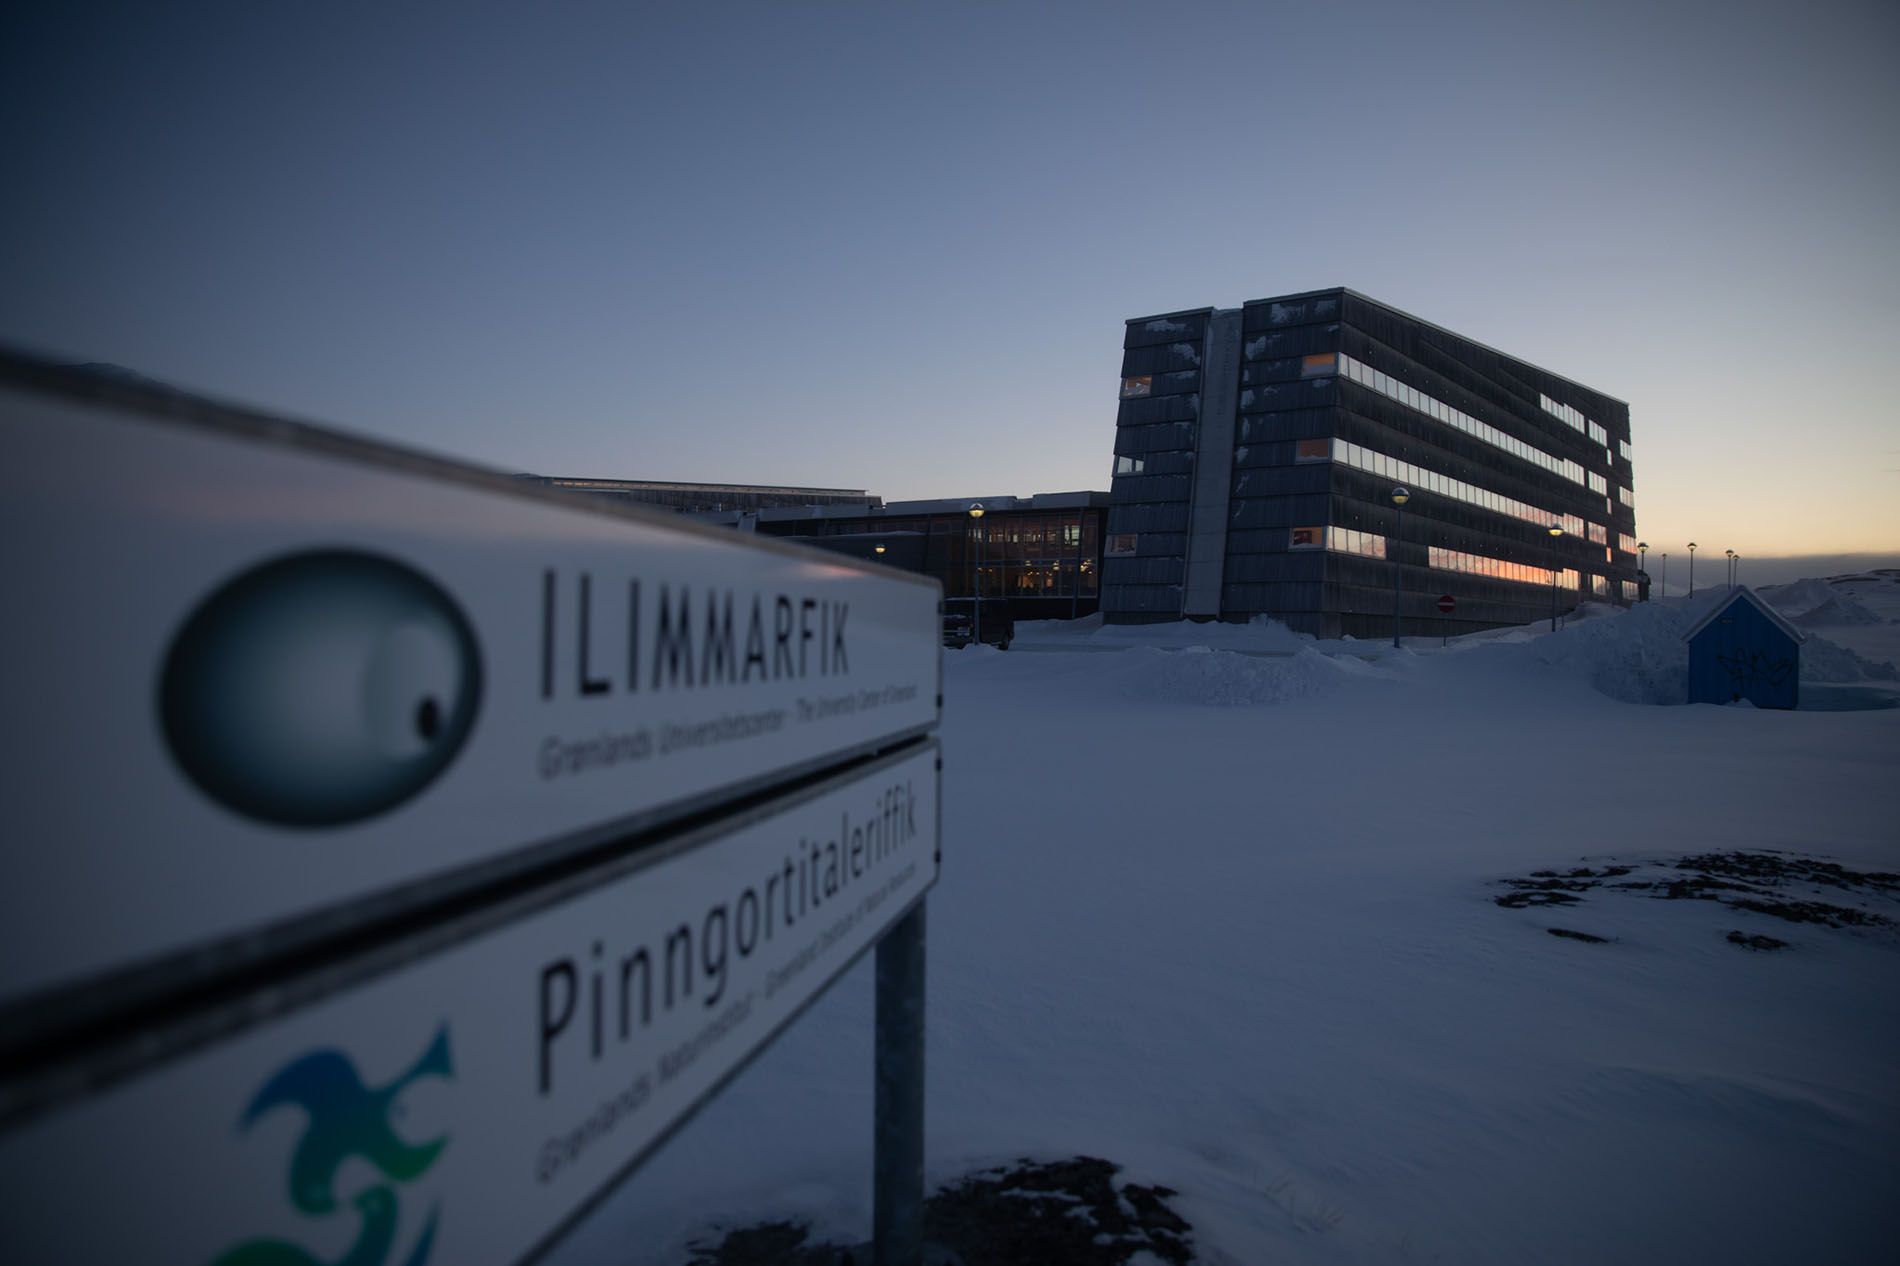 Ilimmarfik, Pinngortitaleriffik, Ilisimatusarfik, Arctic Hub, Greenland research